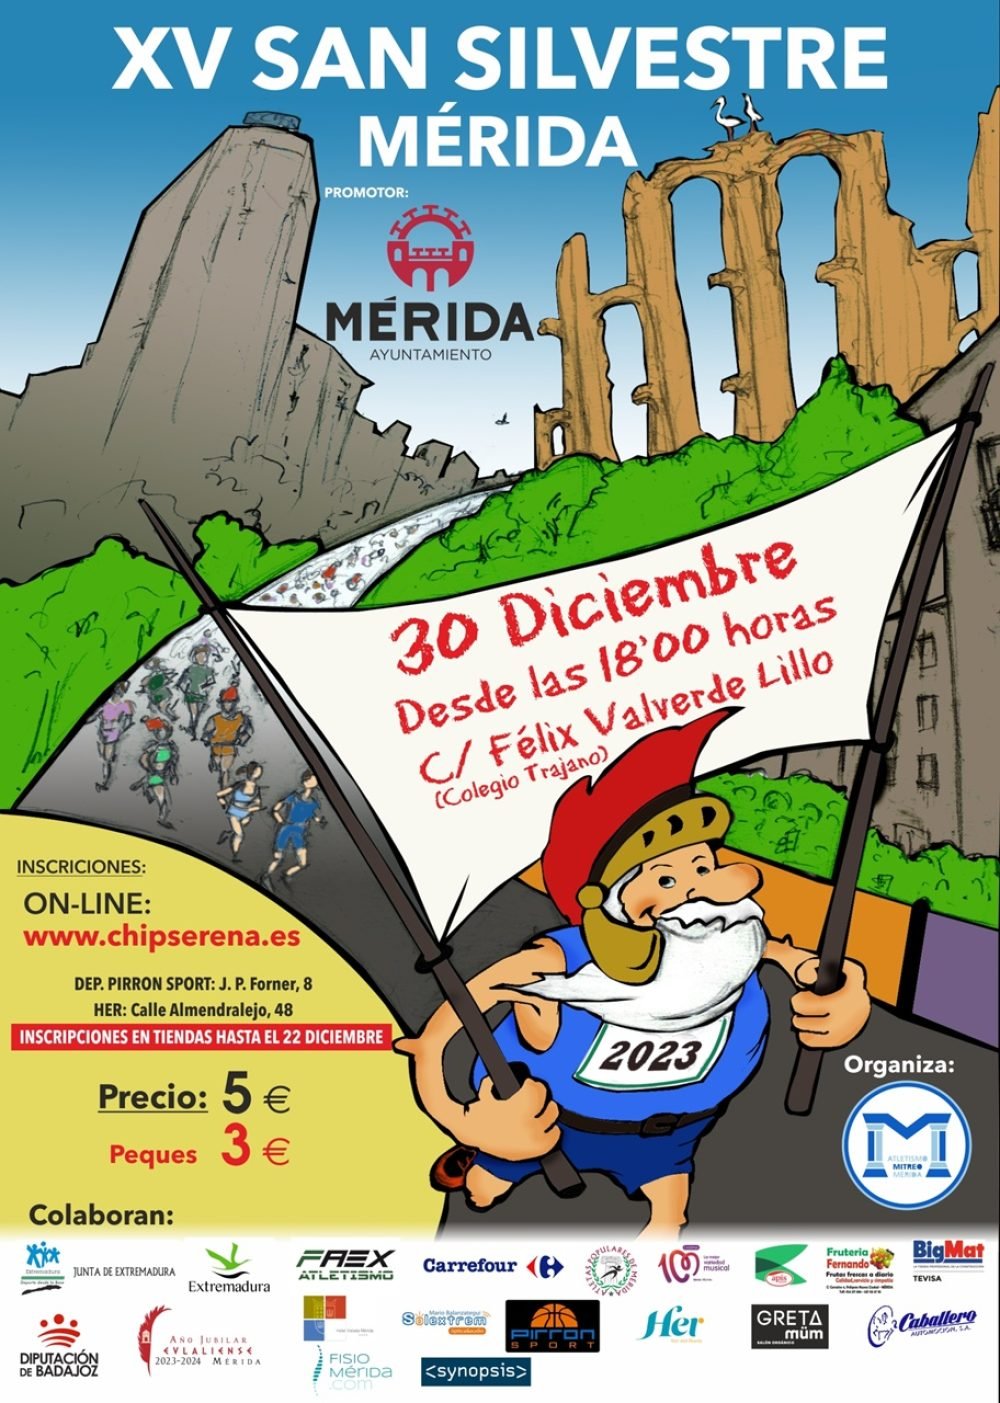 XV San Silvestre de Mérida